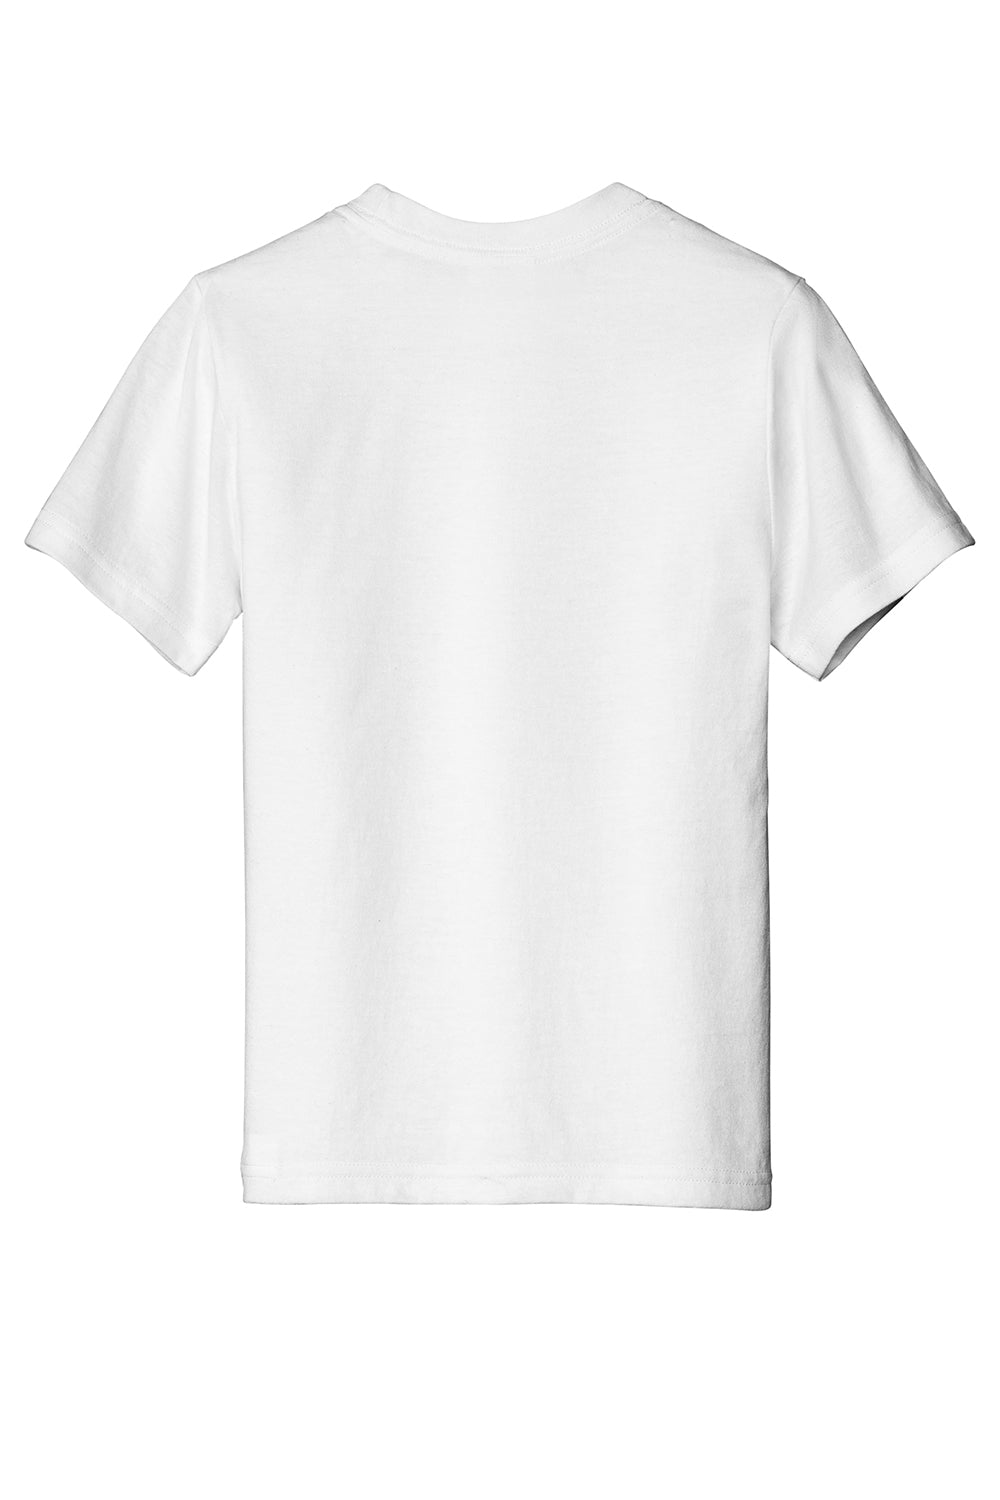 Port & Company PC330Y Youth Short Sleeve Crewneck T-Shirt White Flat Back